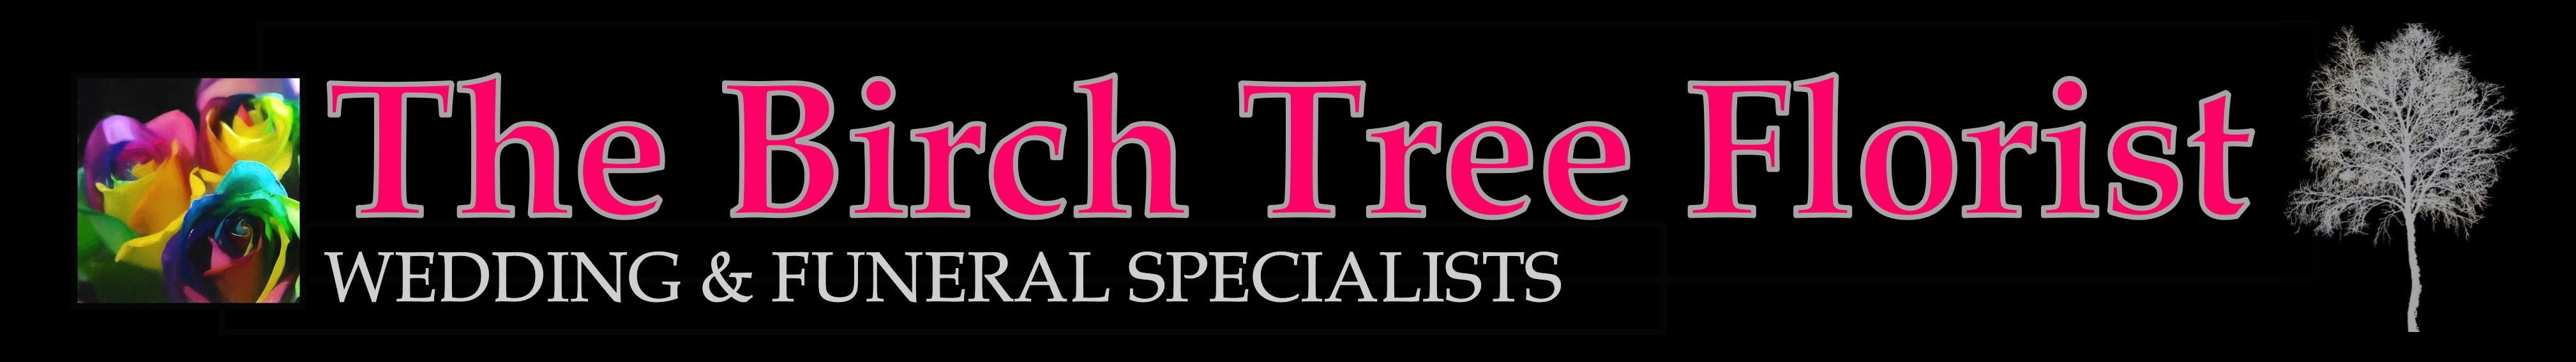 The Birch Tree Florist - Logo